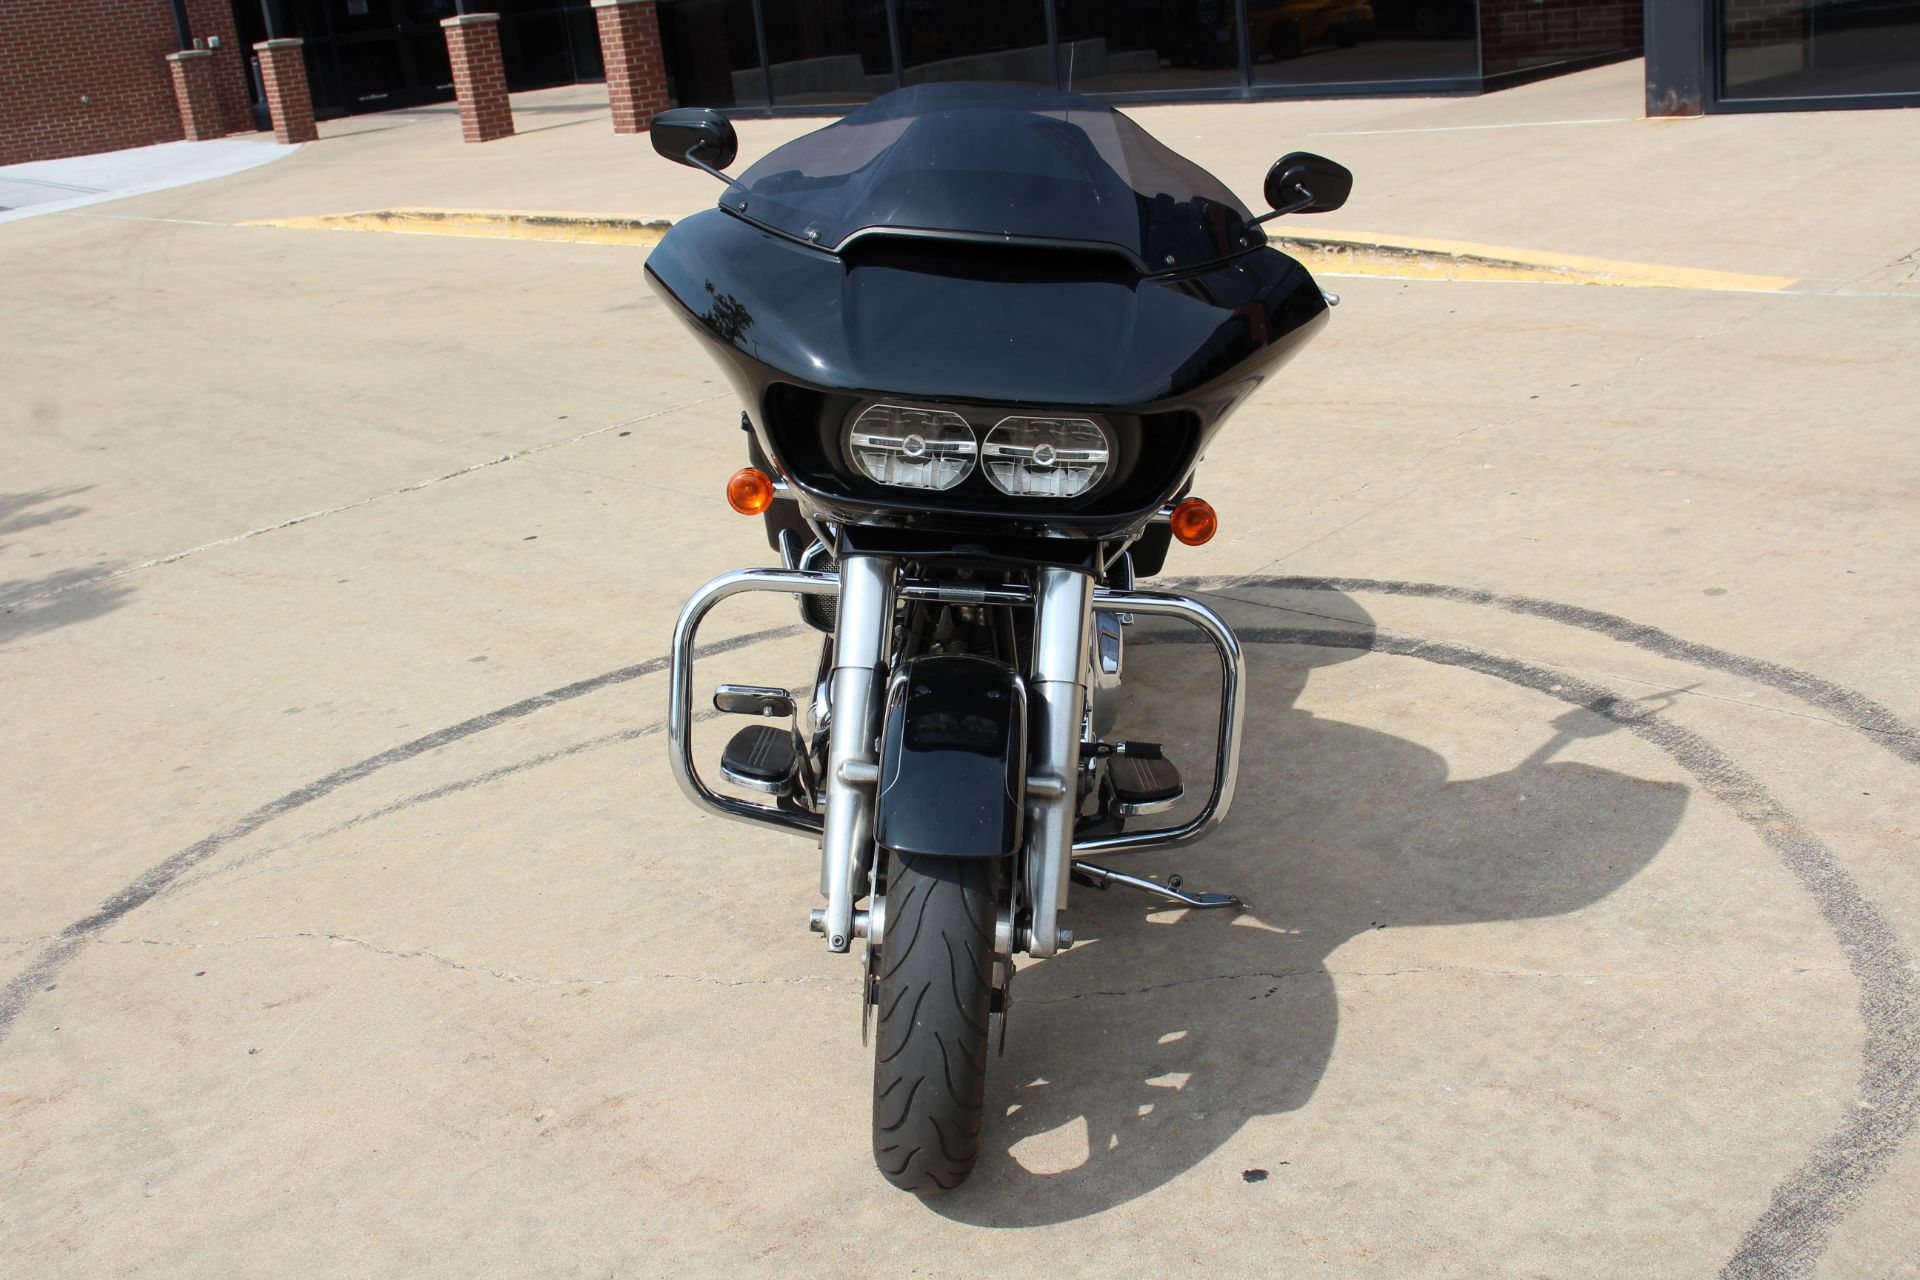 2015 Harley-Davidson Road Glide® Special in Flint, Michigan - Photo 4